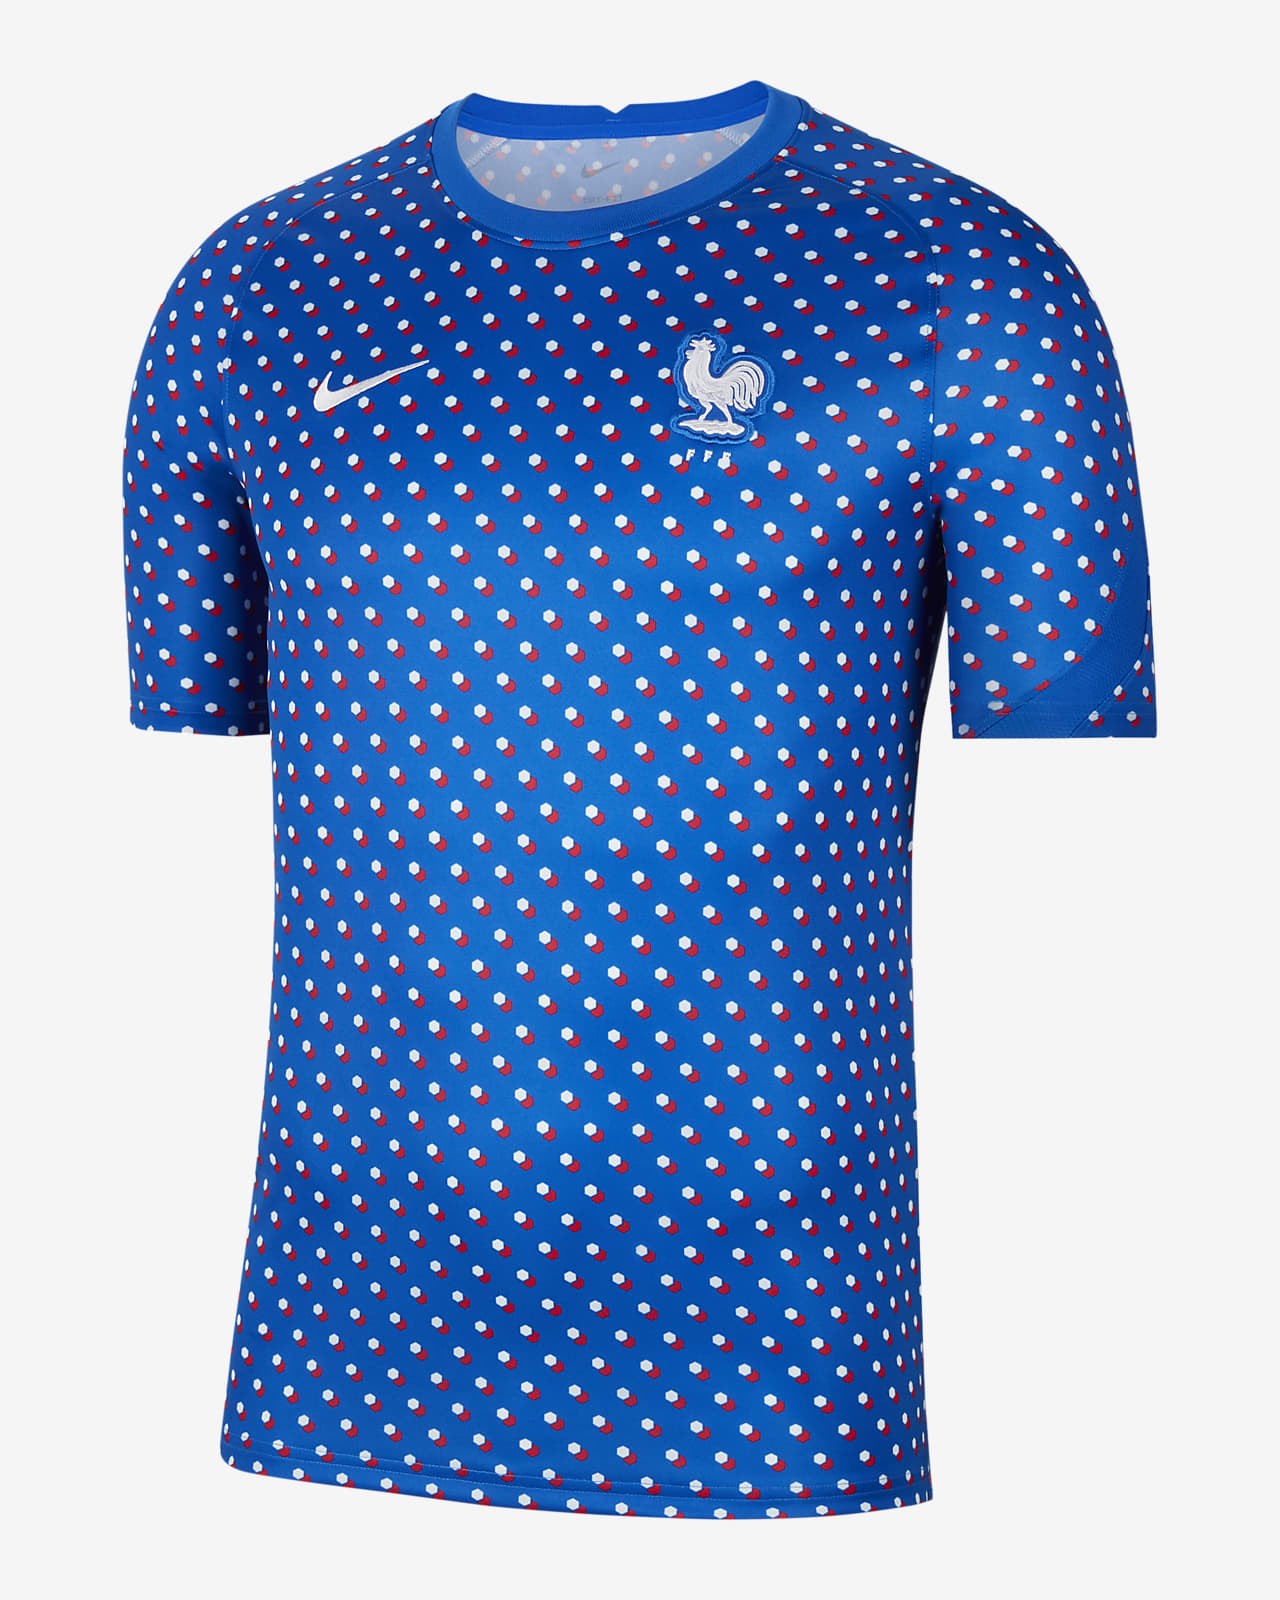 FFF Men's Nike Dri-FIT Short-Sleeve Football Top